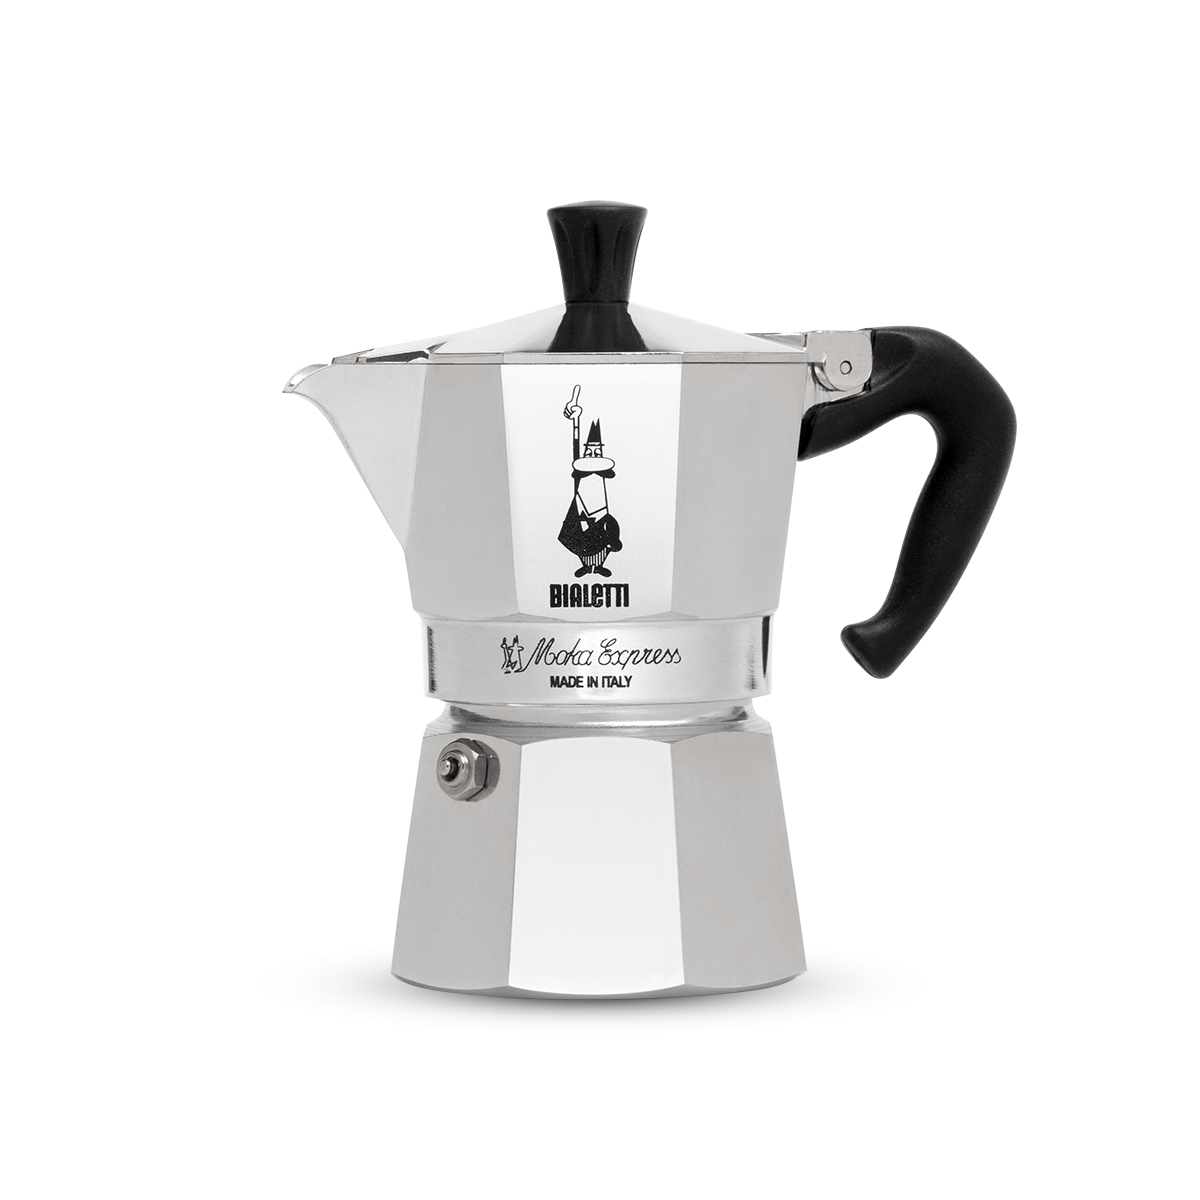 Bialetti Moka Express Aluminium Stovetop Coffee Maker Cup - Silver